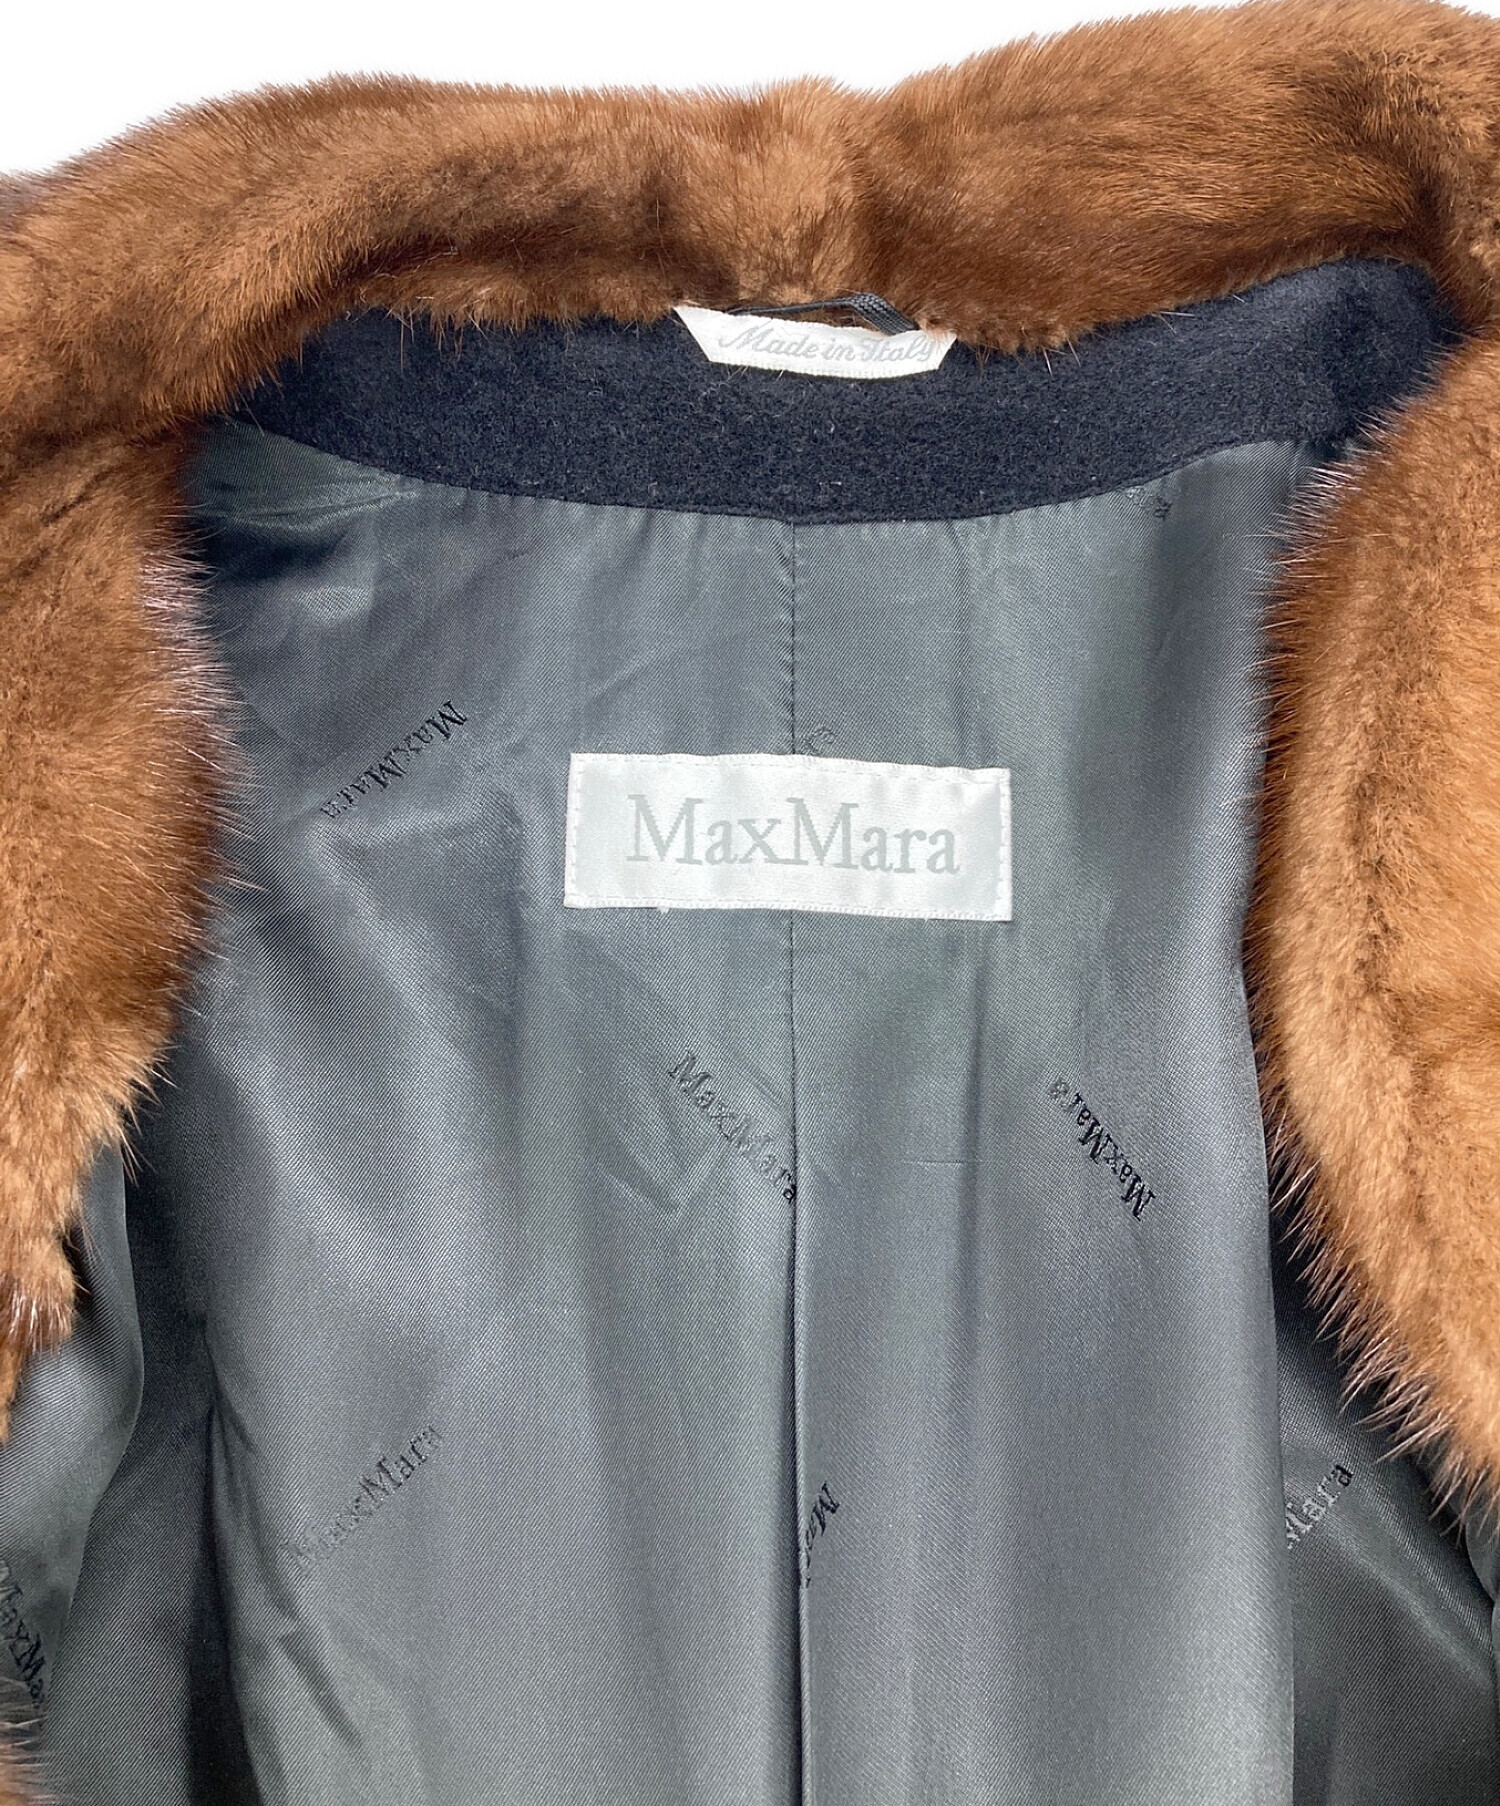 MaxMara (マックスマーラ) ミンクカラー カシミヤ混ウールコート ブラック サイズ:40